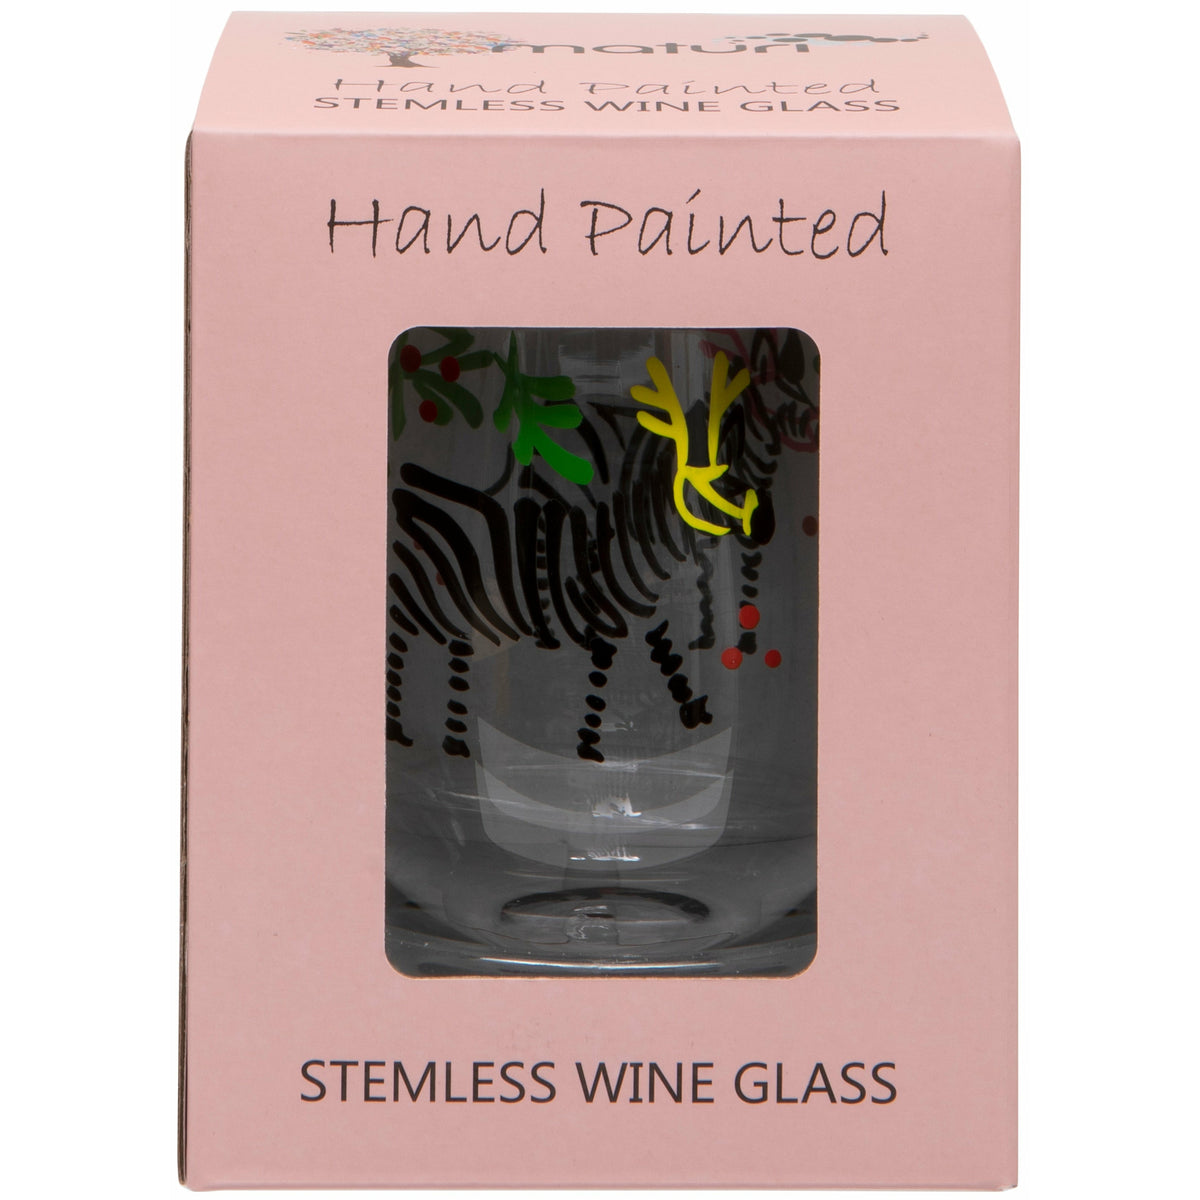 Hand Painted Zebra Stemless Wine Glass in Box